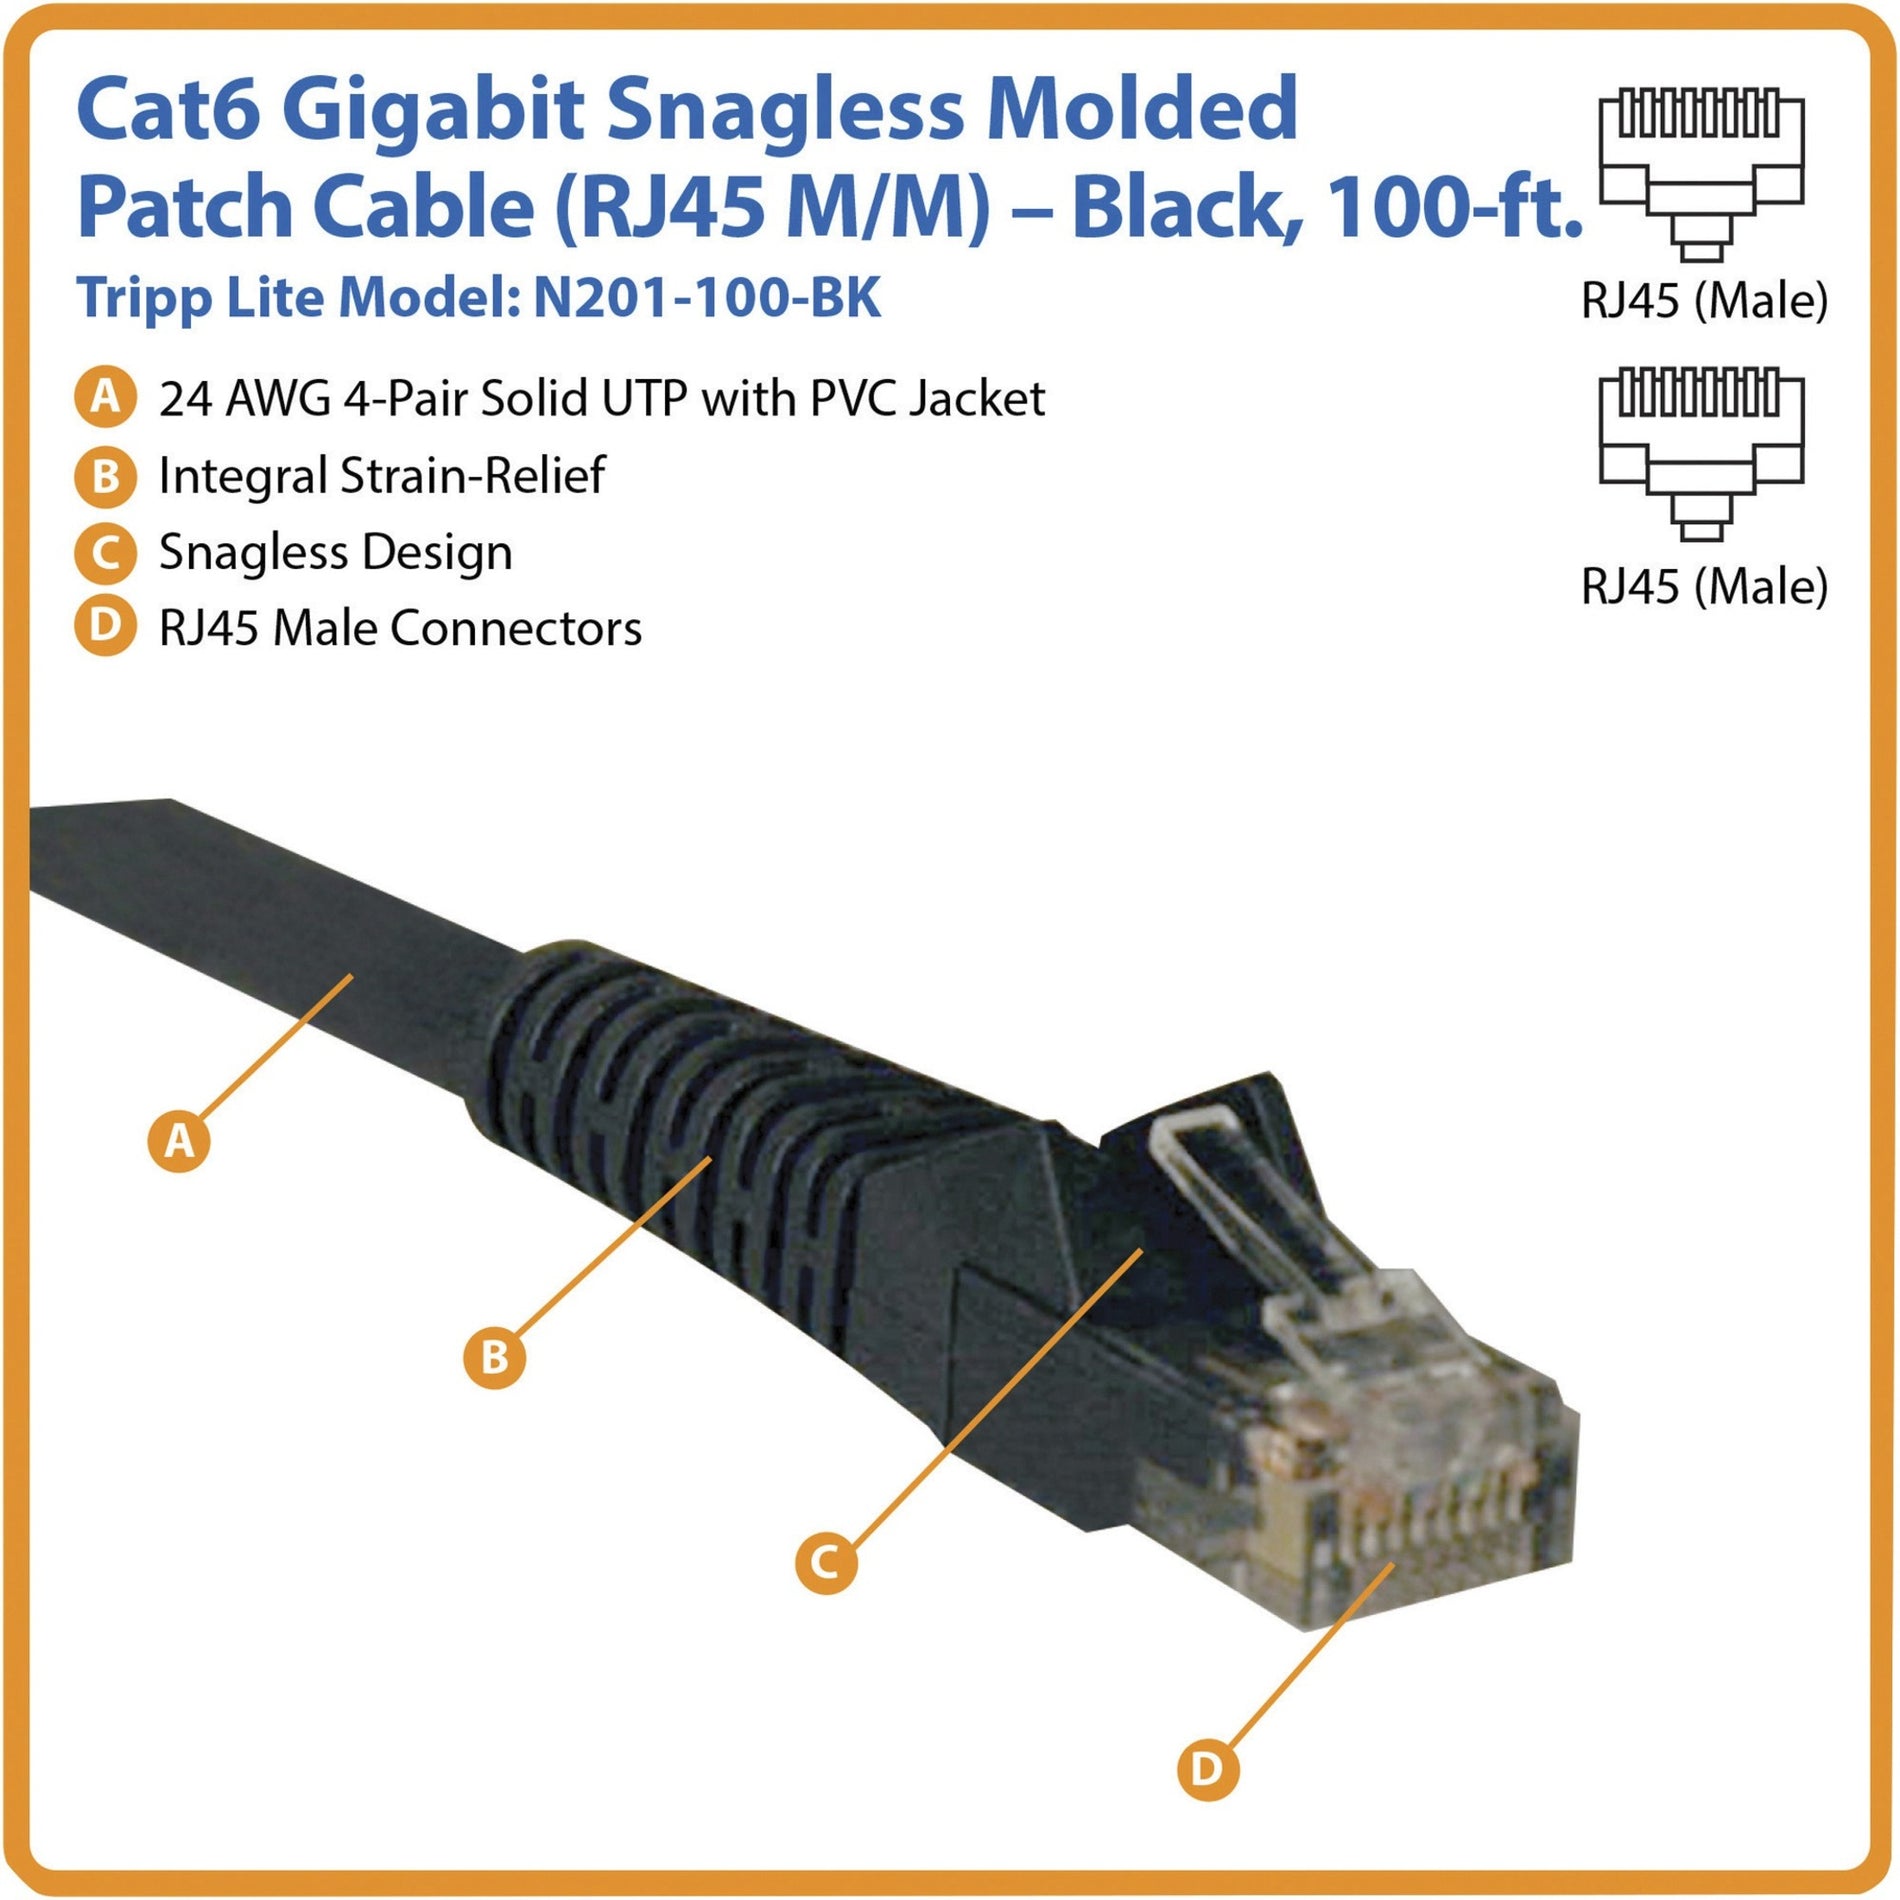 Tripp Lite N201-100-BK 100-ft. Cat6 Gigabit Snagless Molded Patch Cable, Black